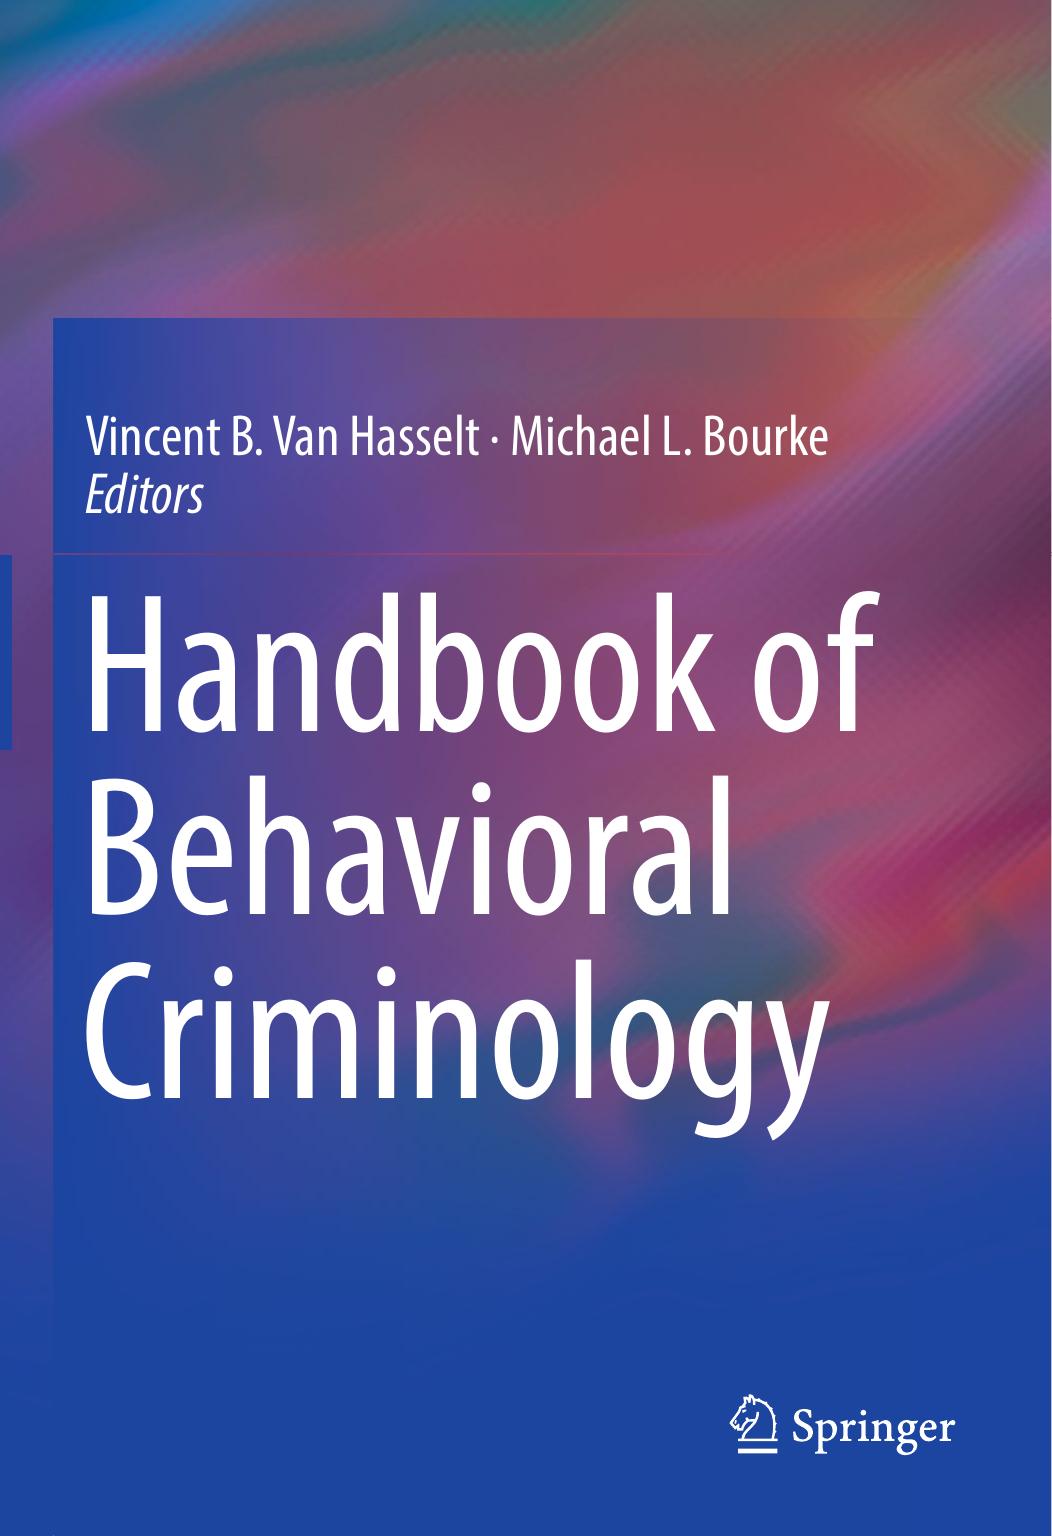 Handbook of Behavioral Criminology 2017